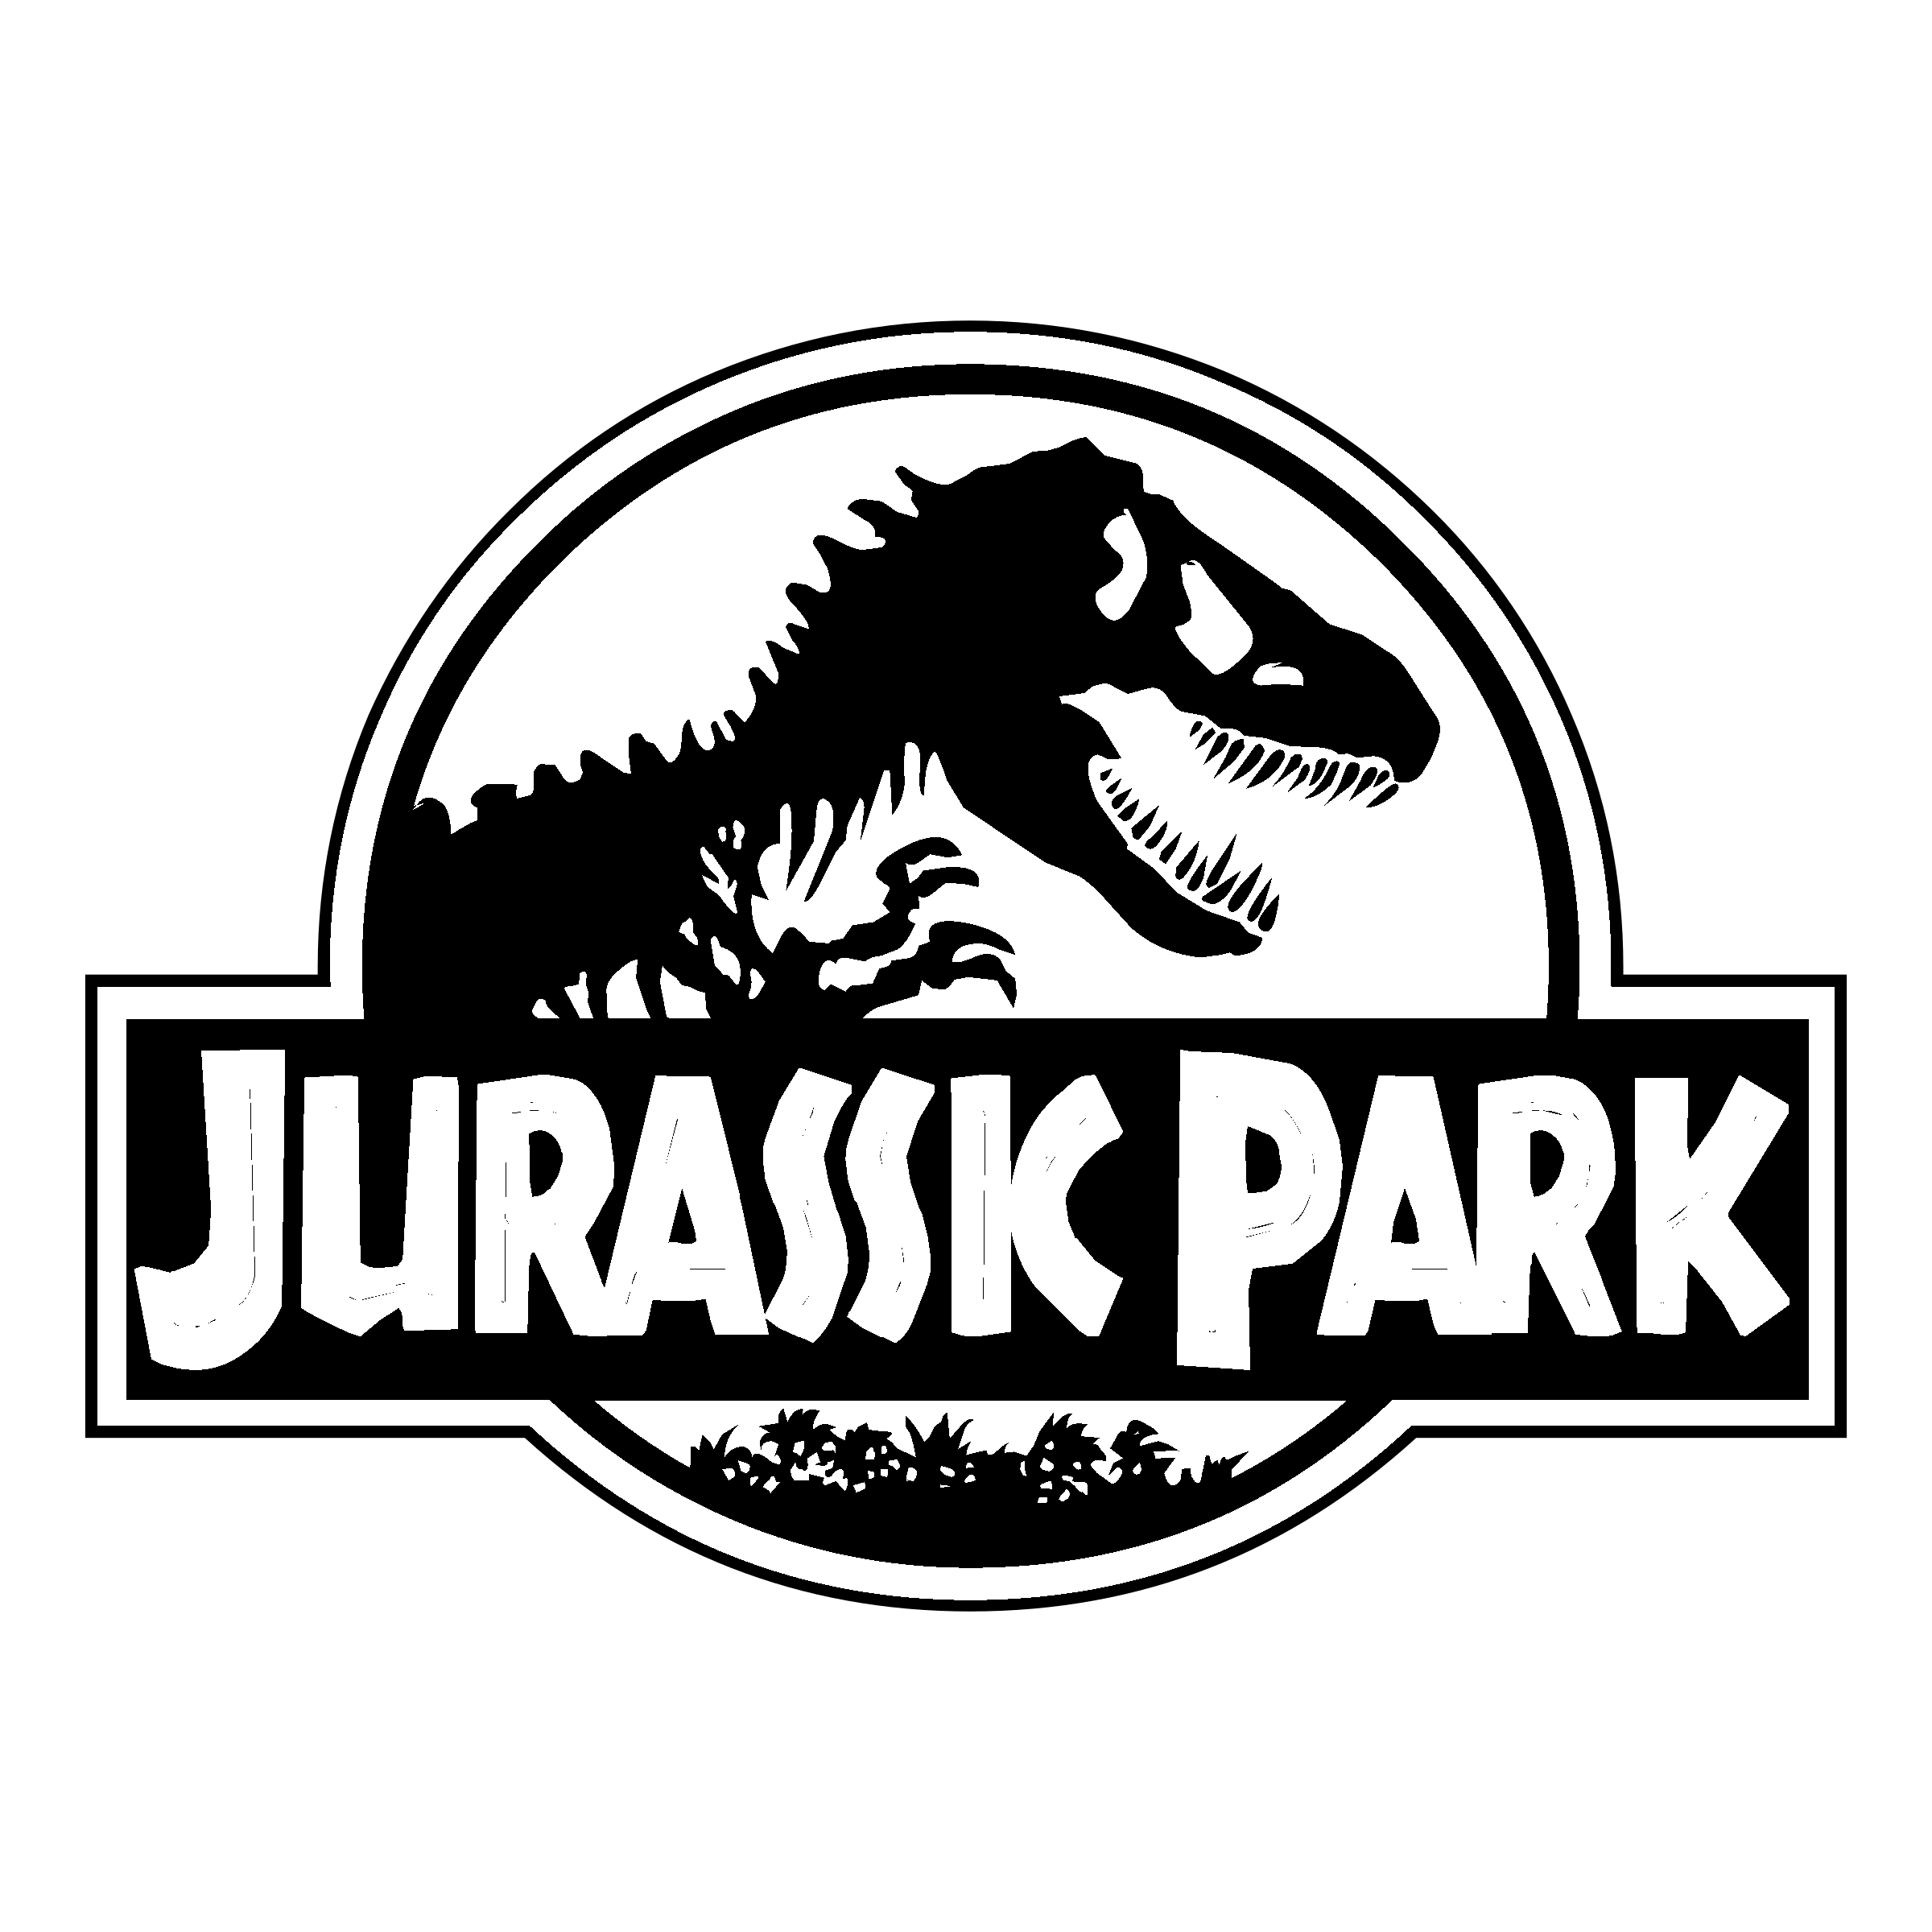 Jurassic Park Logo - Jurassic Park Logo PNG Transparent & SVG Vector